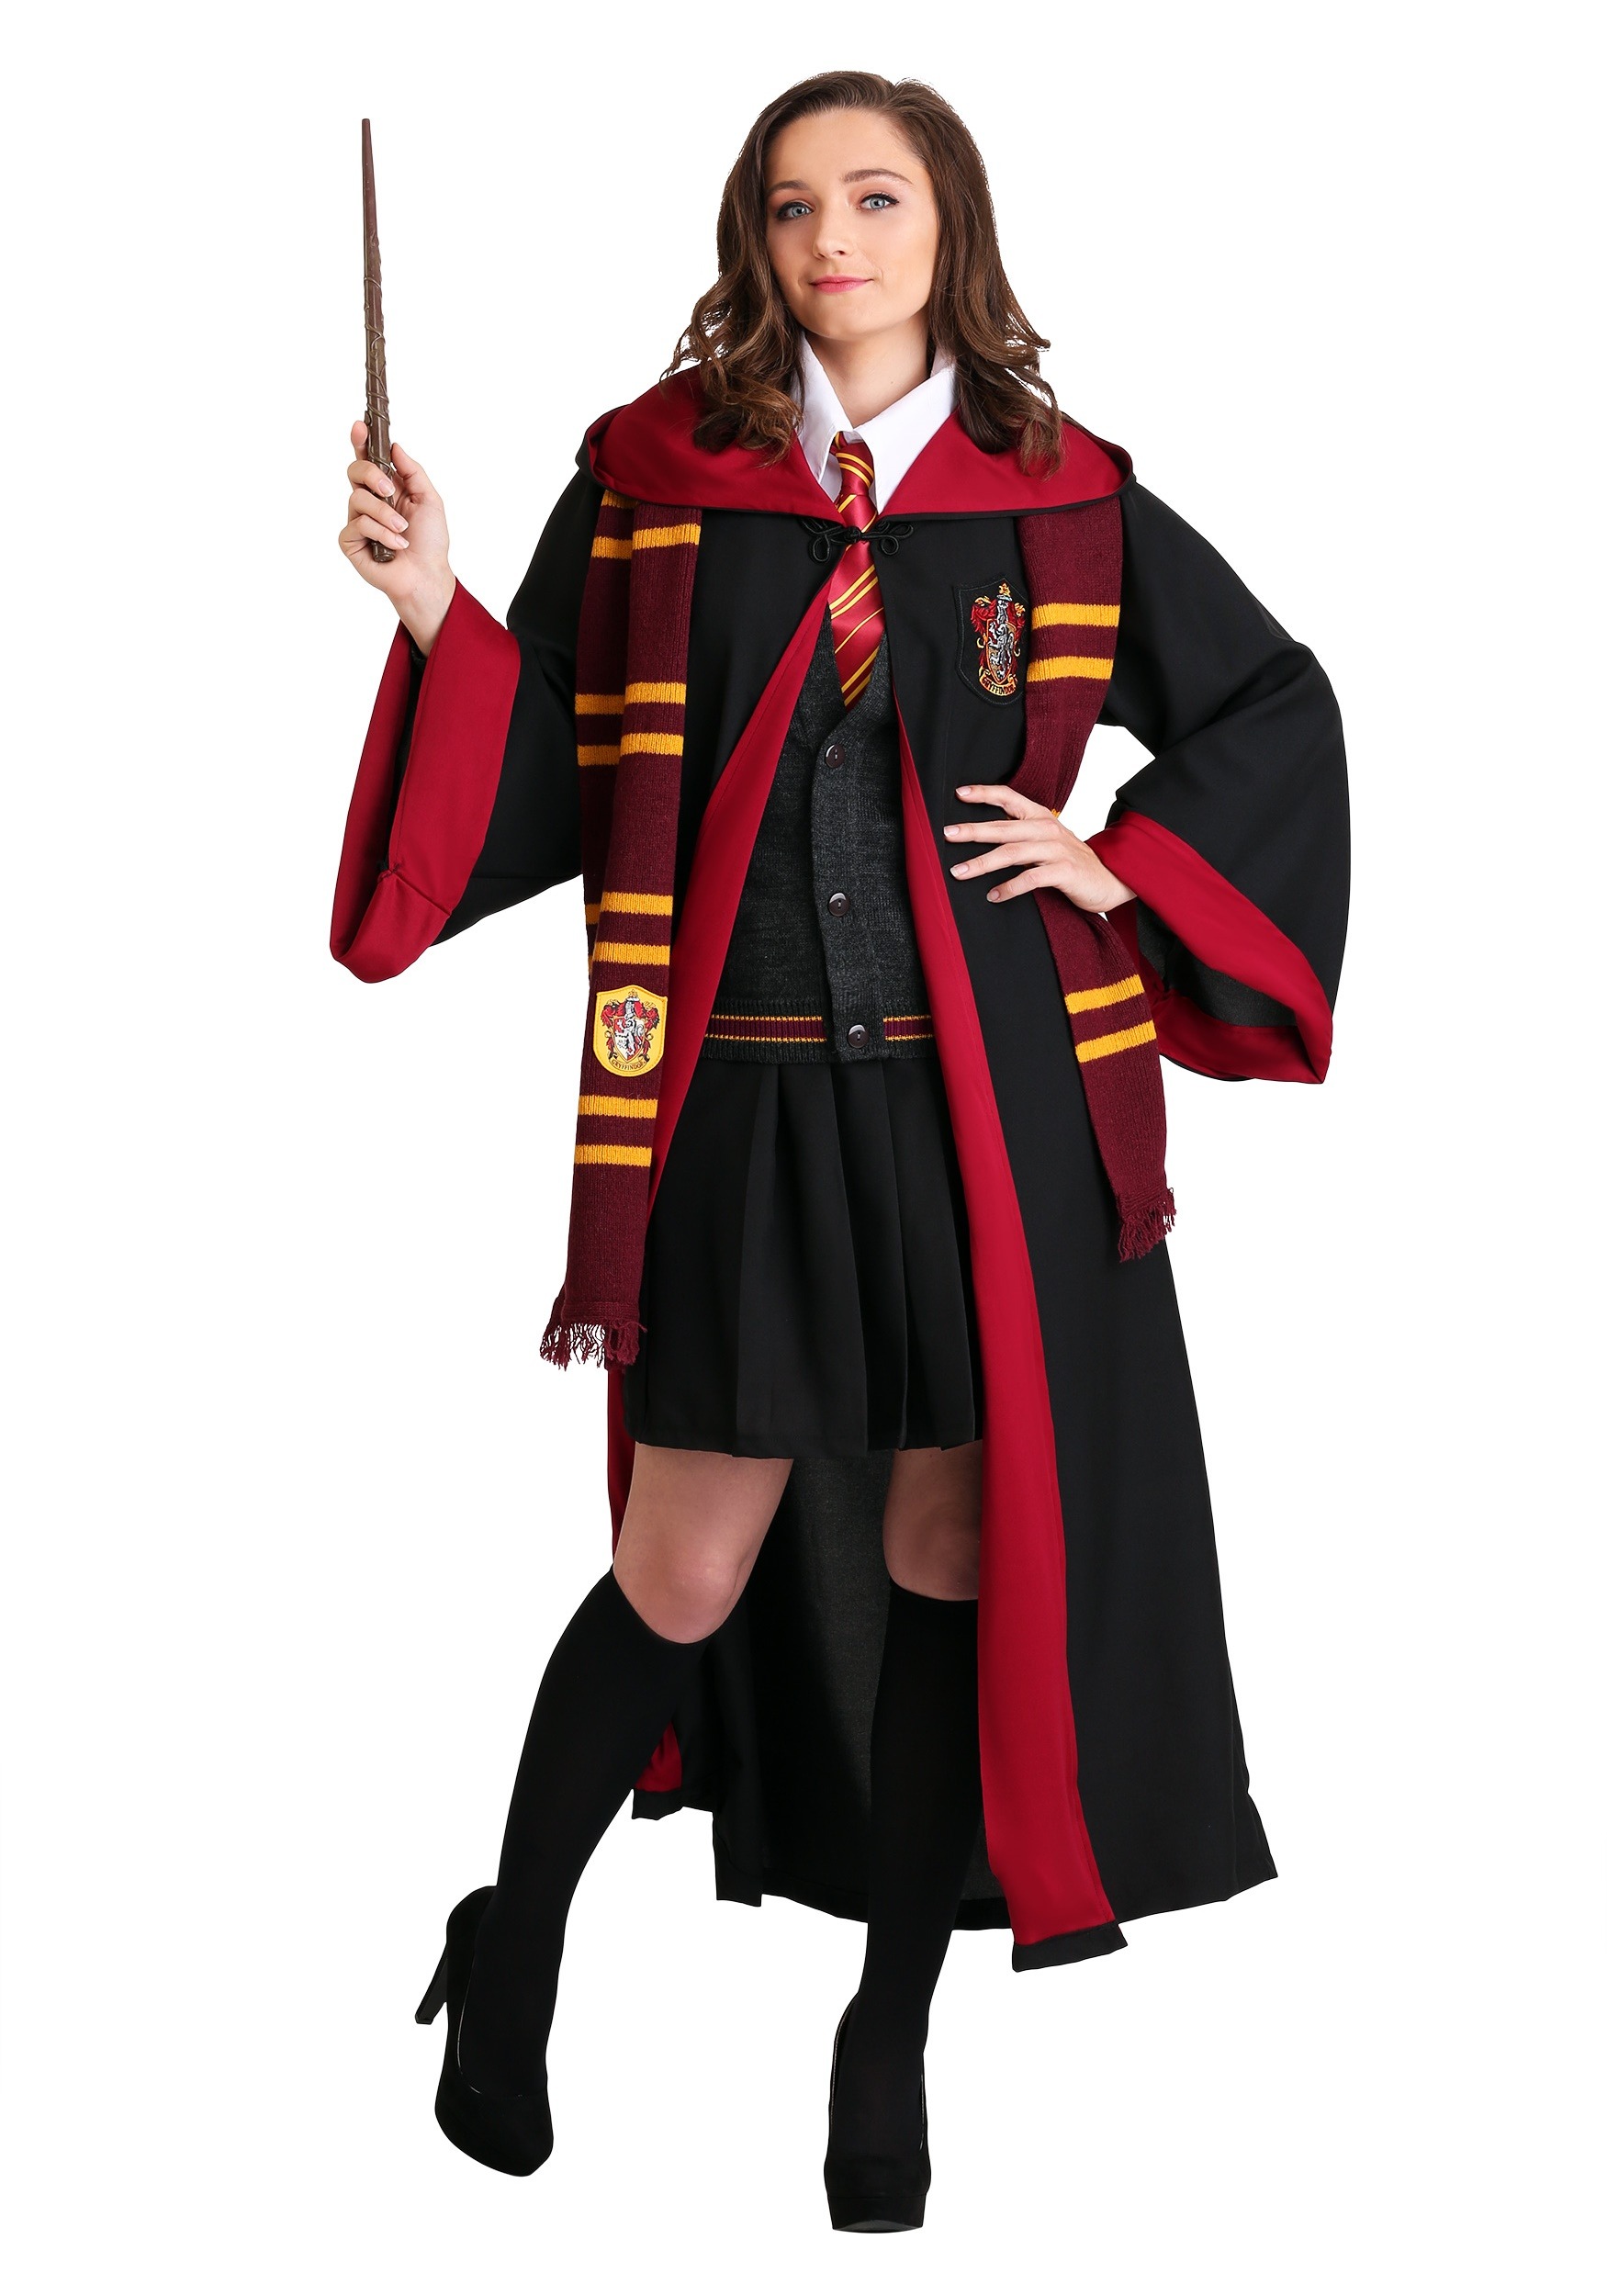 Girls Deluxe Hermione Granger Uniform and Robe Costume.